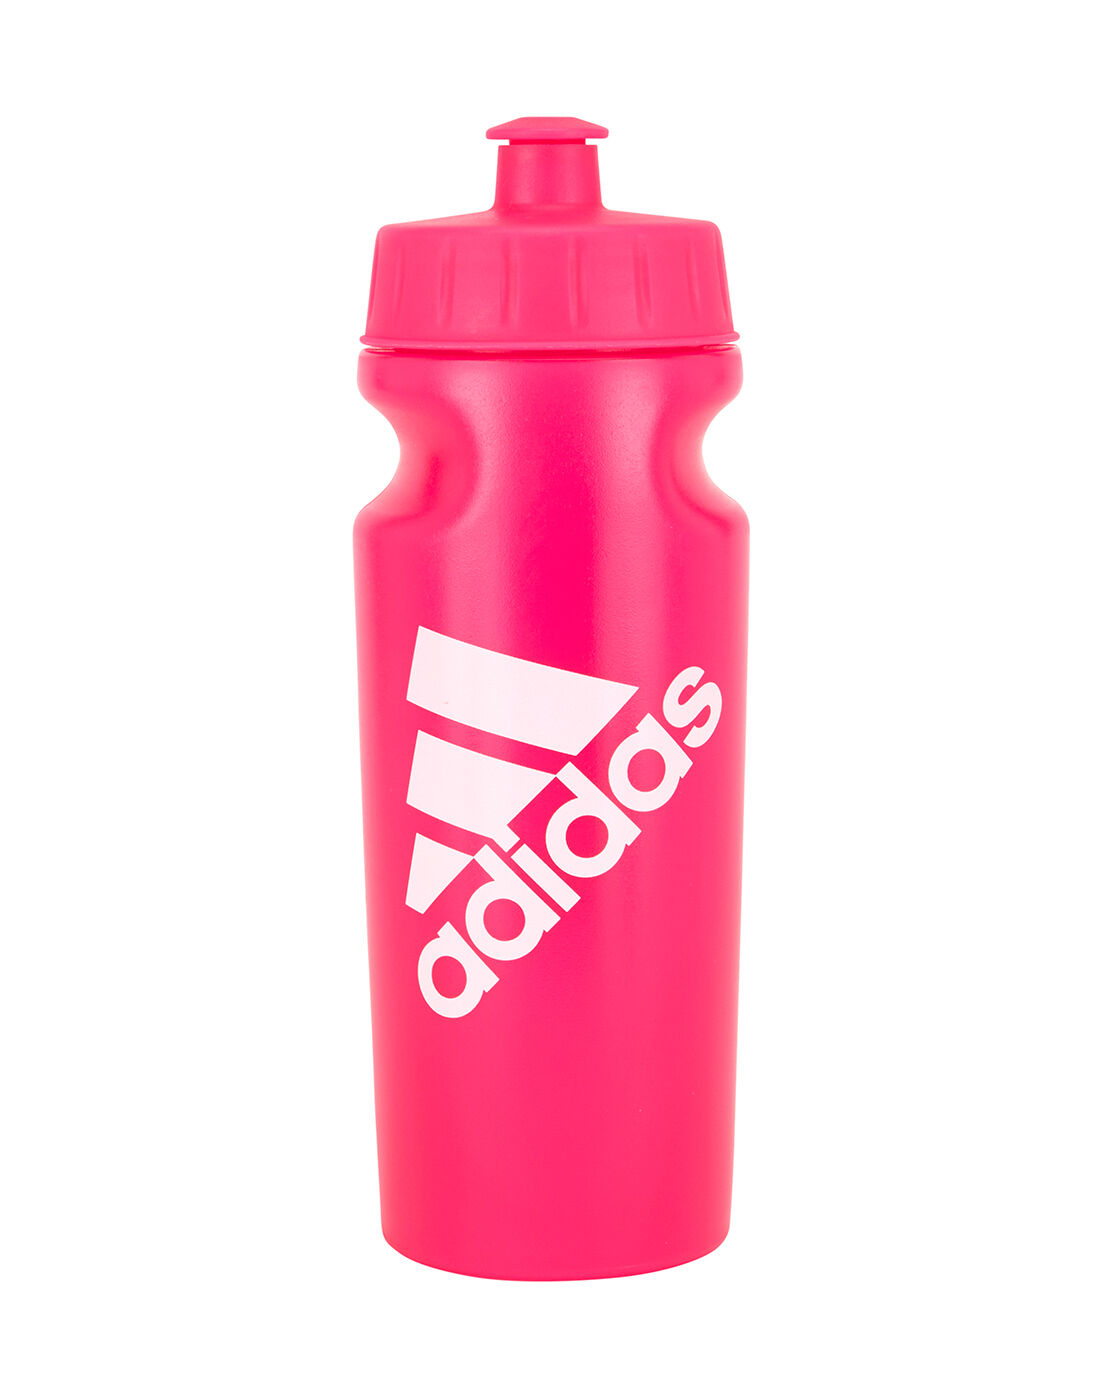 adidas thermos bottle